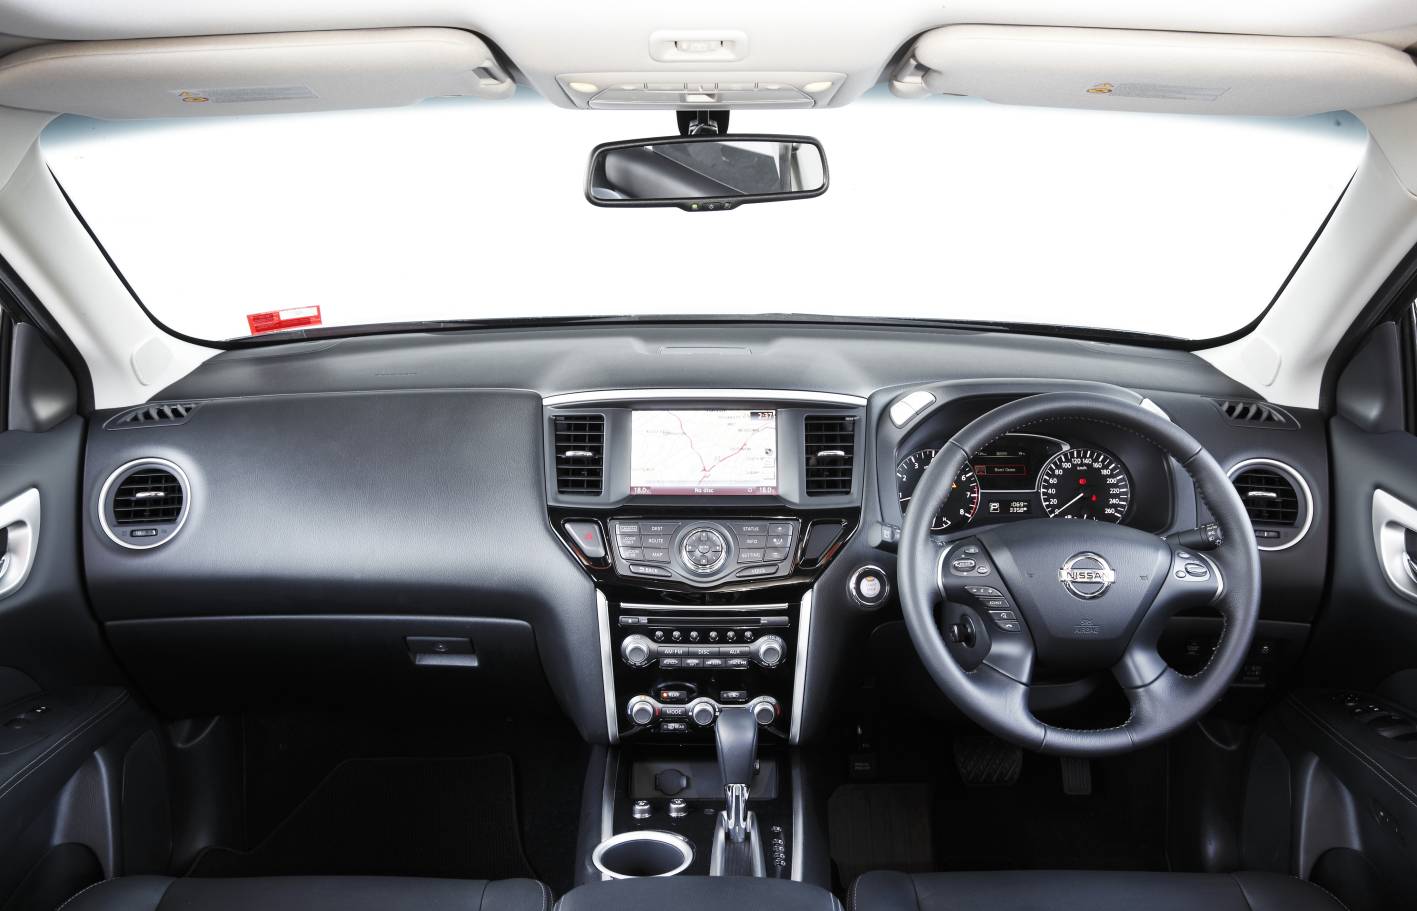 Nissan Pathfinder Review: 2014 Pathfinder 4WD